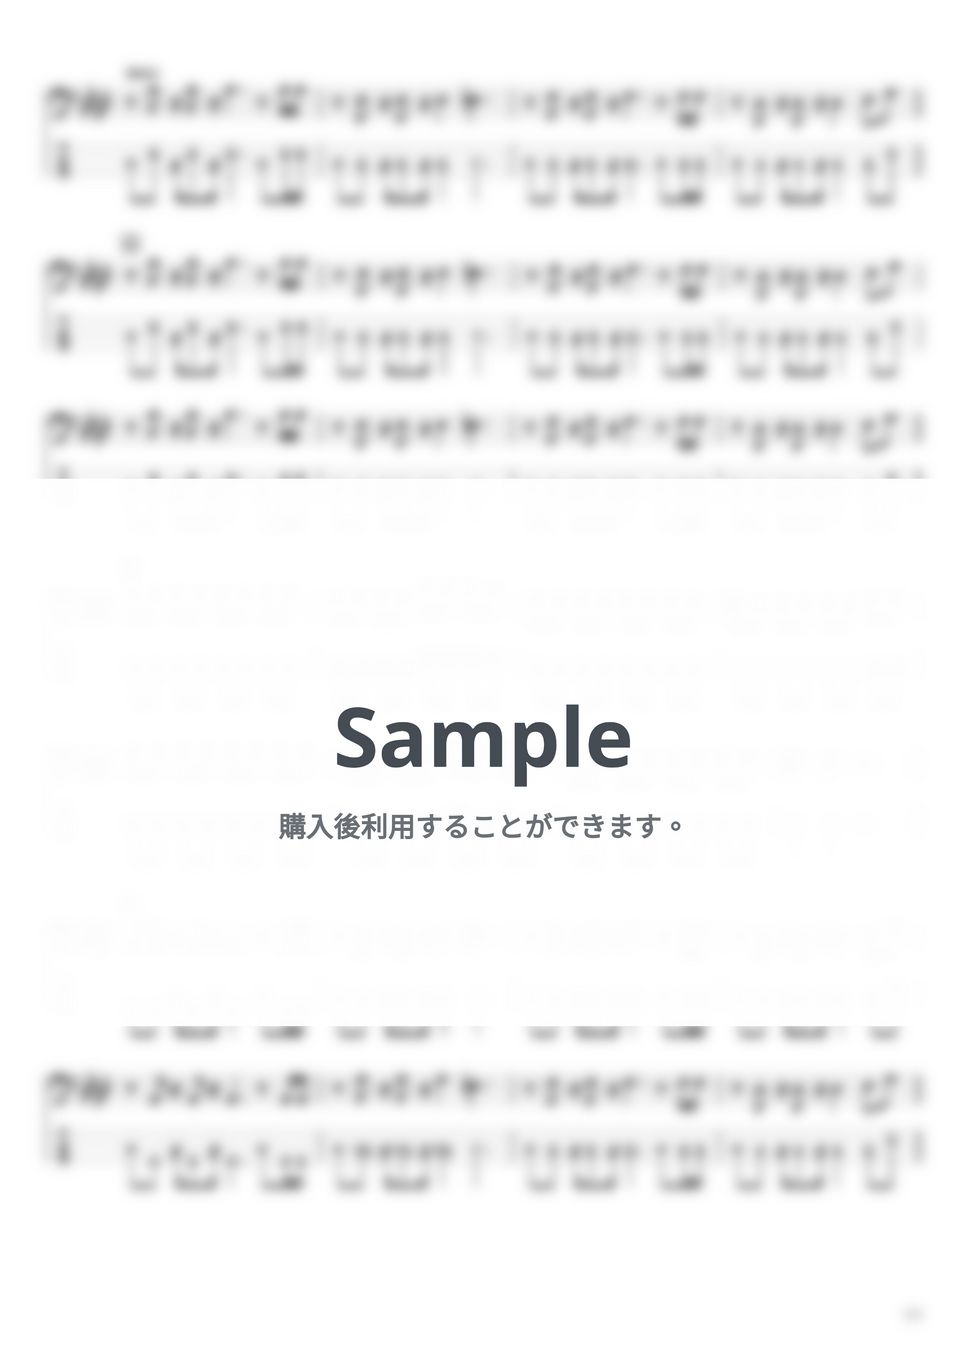 milet×Aimer×幾田りら - おもかげ (produced by Vaundy) (ベースTAB譜☆4弦ベース対応) by swbass